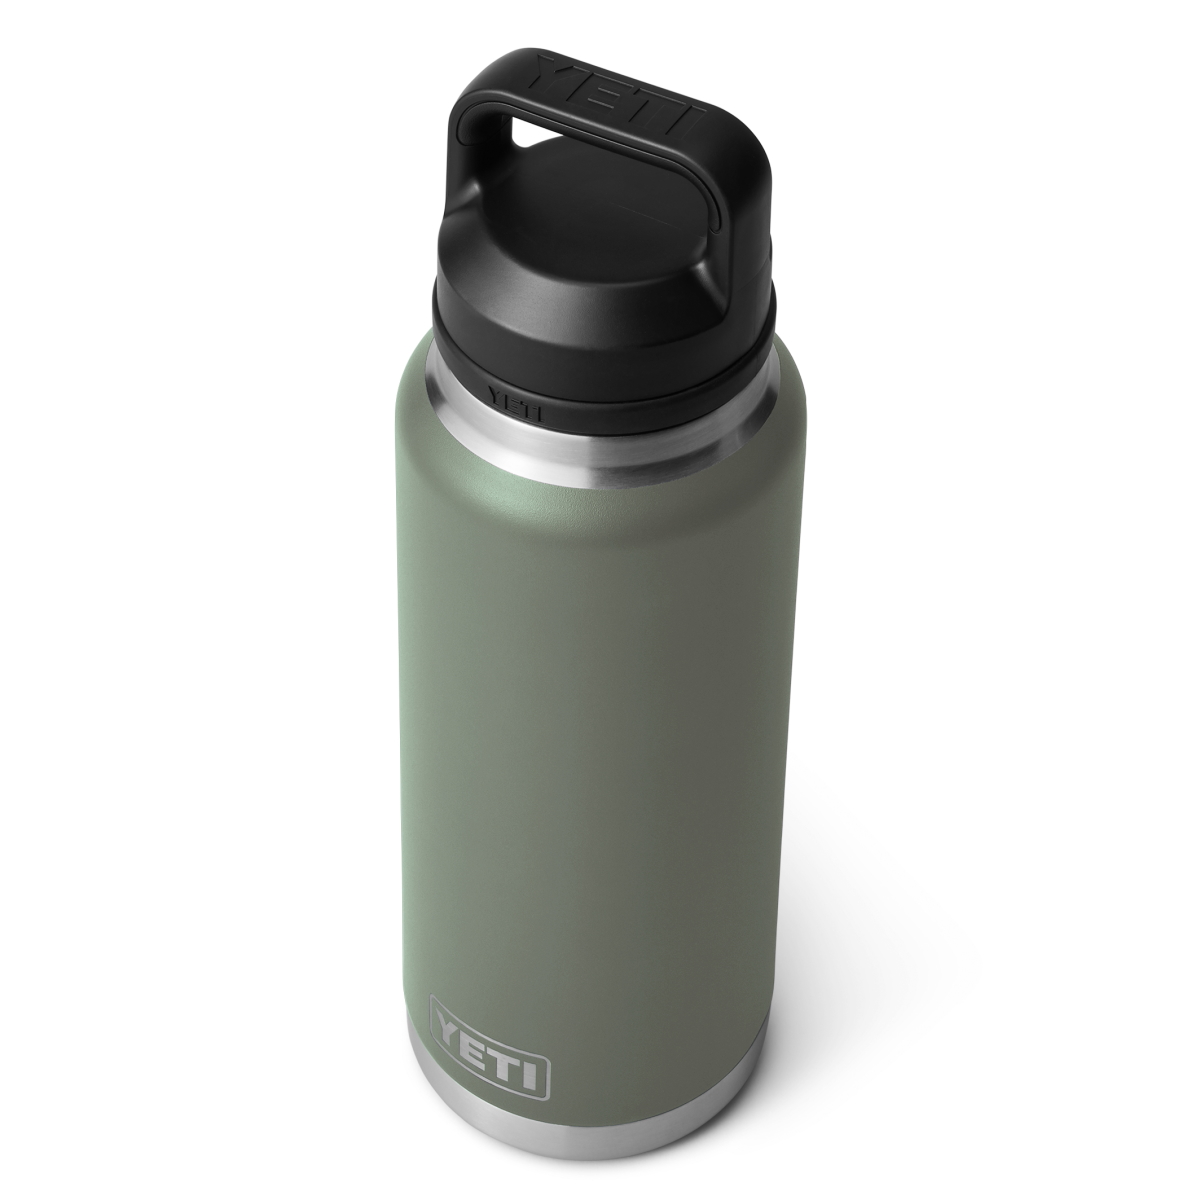 Yeti 36 oz. Rambler Bottle with Chug Cap, Camp Green